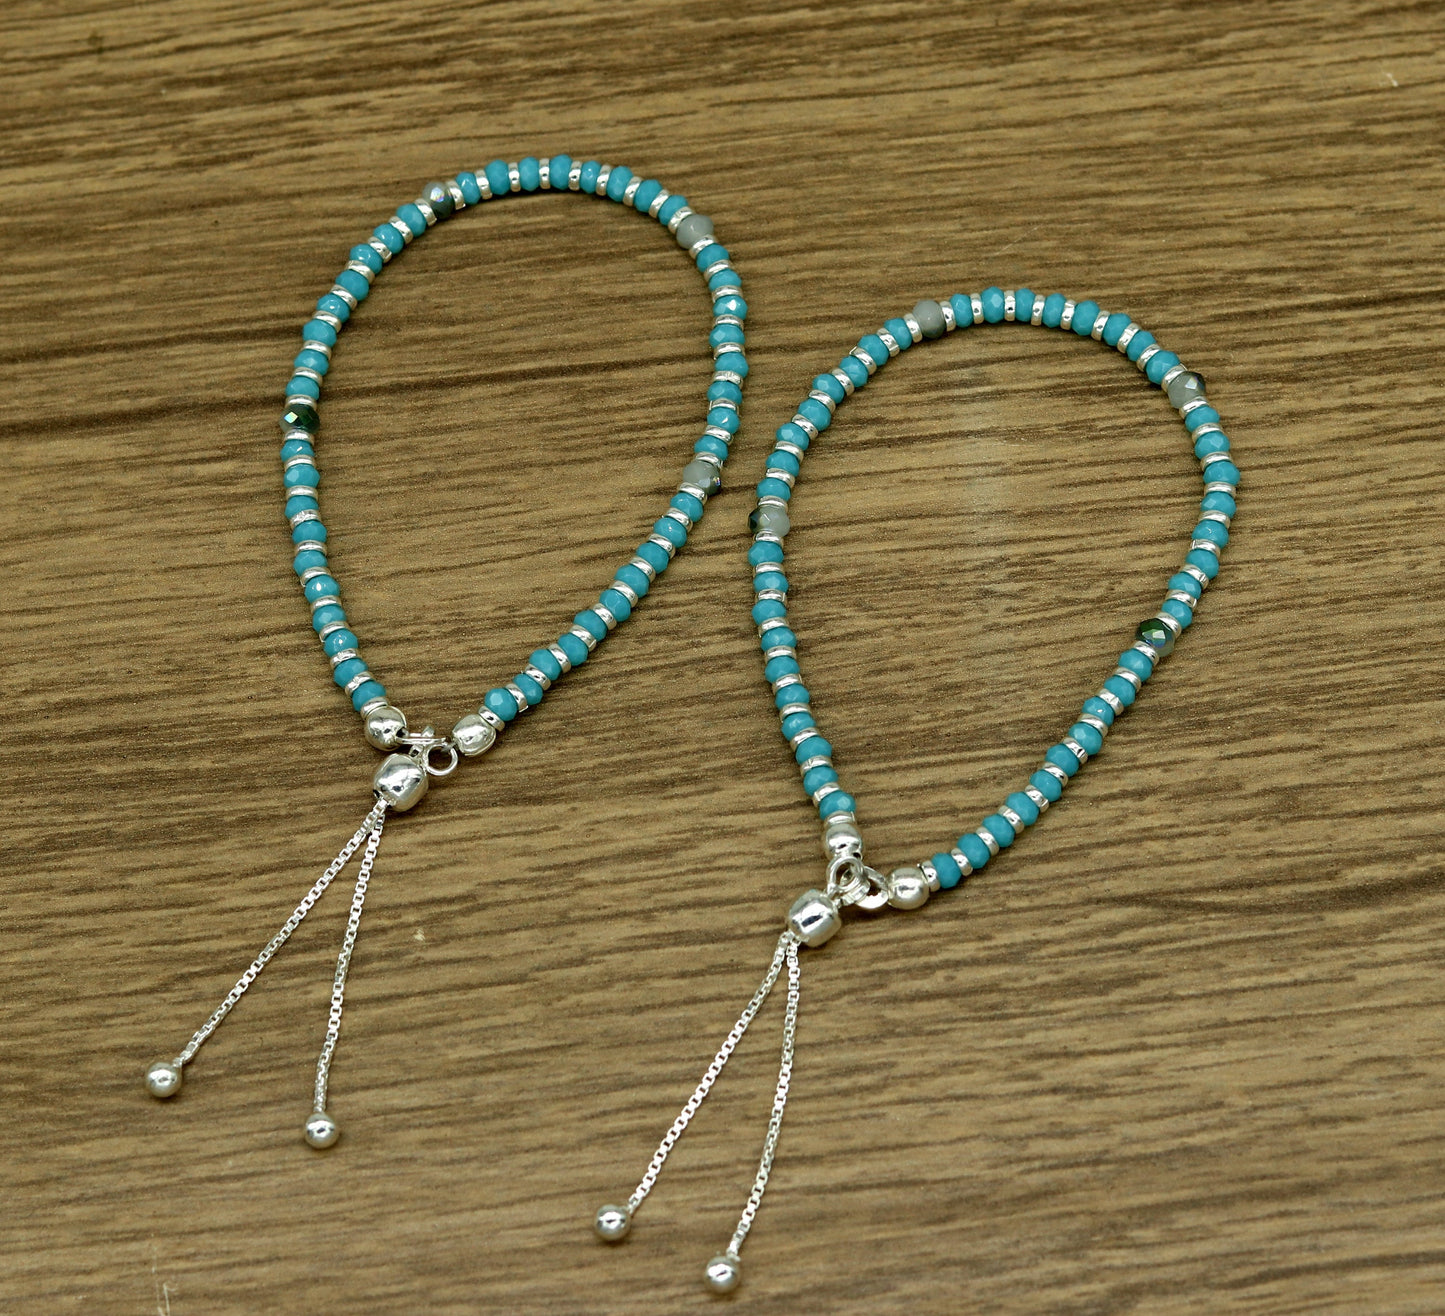 7" long 925 sterling silver gorgeous blue quartz beaded bracelet, charm bracelet, customized bracelet adjustable girl's jewelry sbr161 - TRIBAL ORNAMENTS